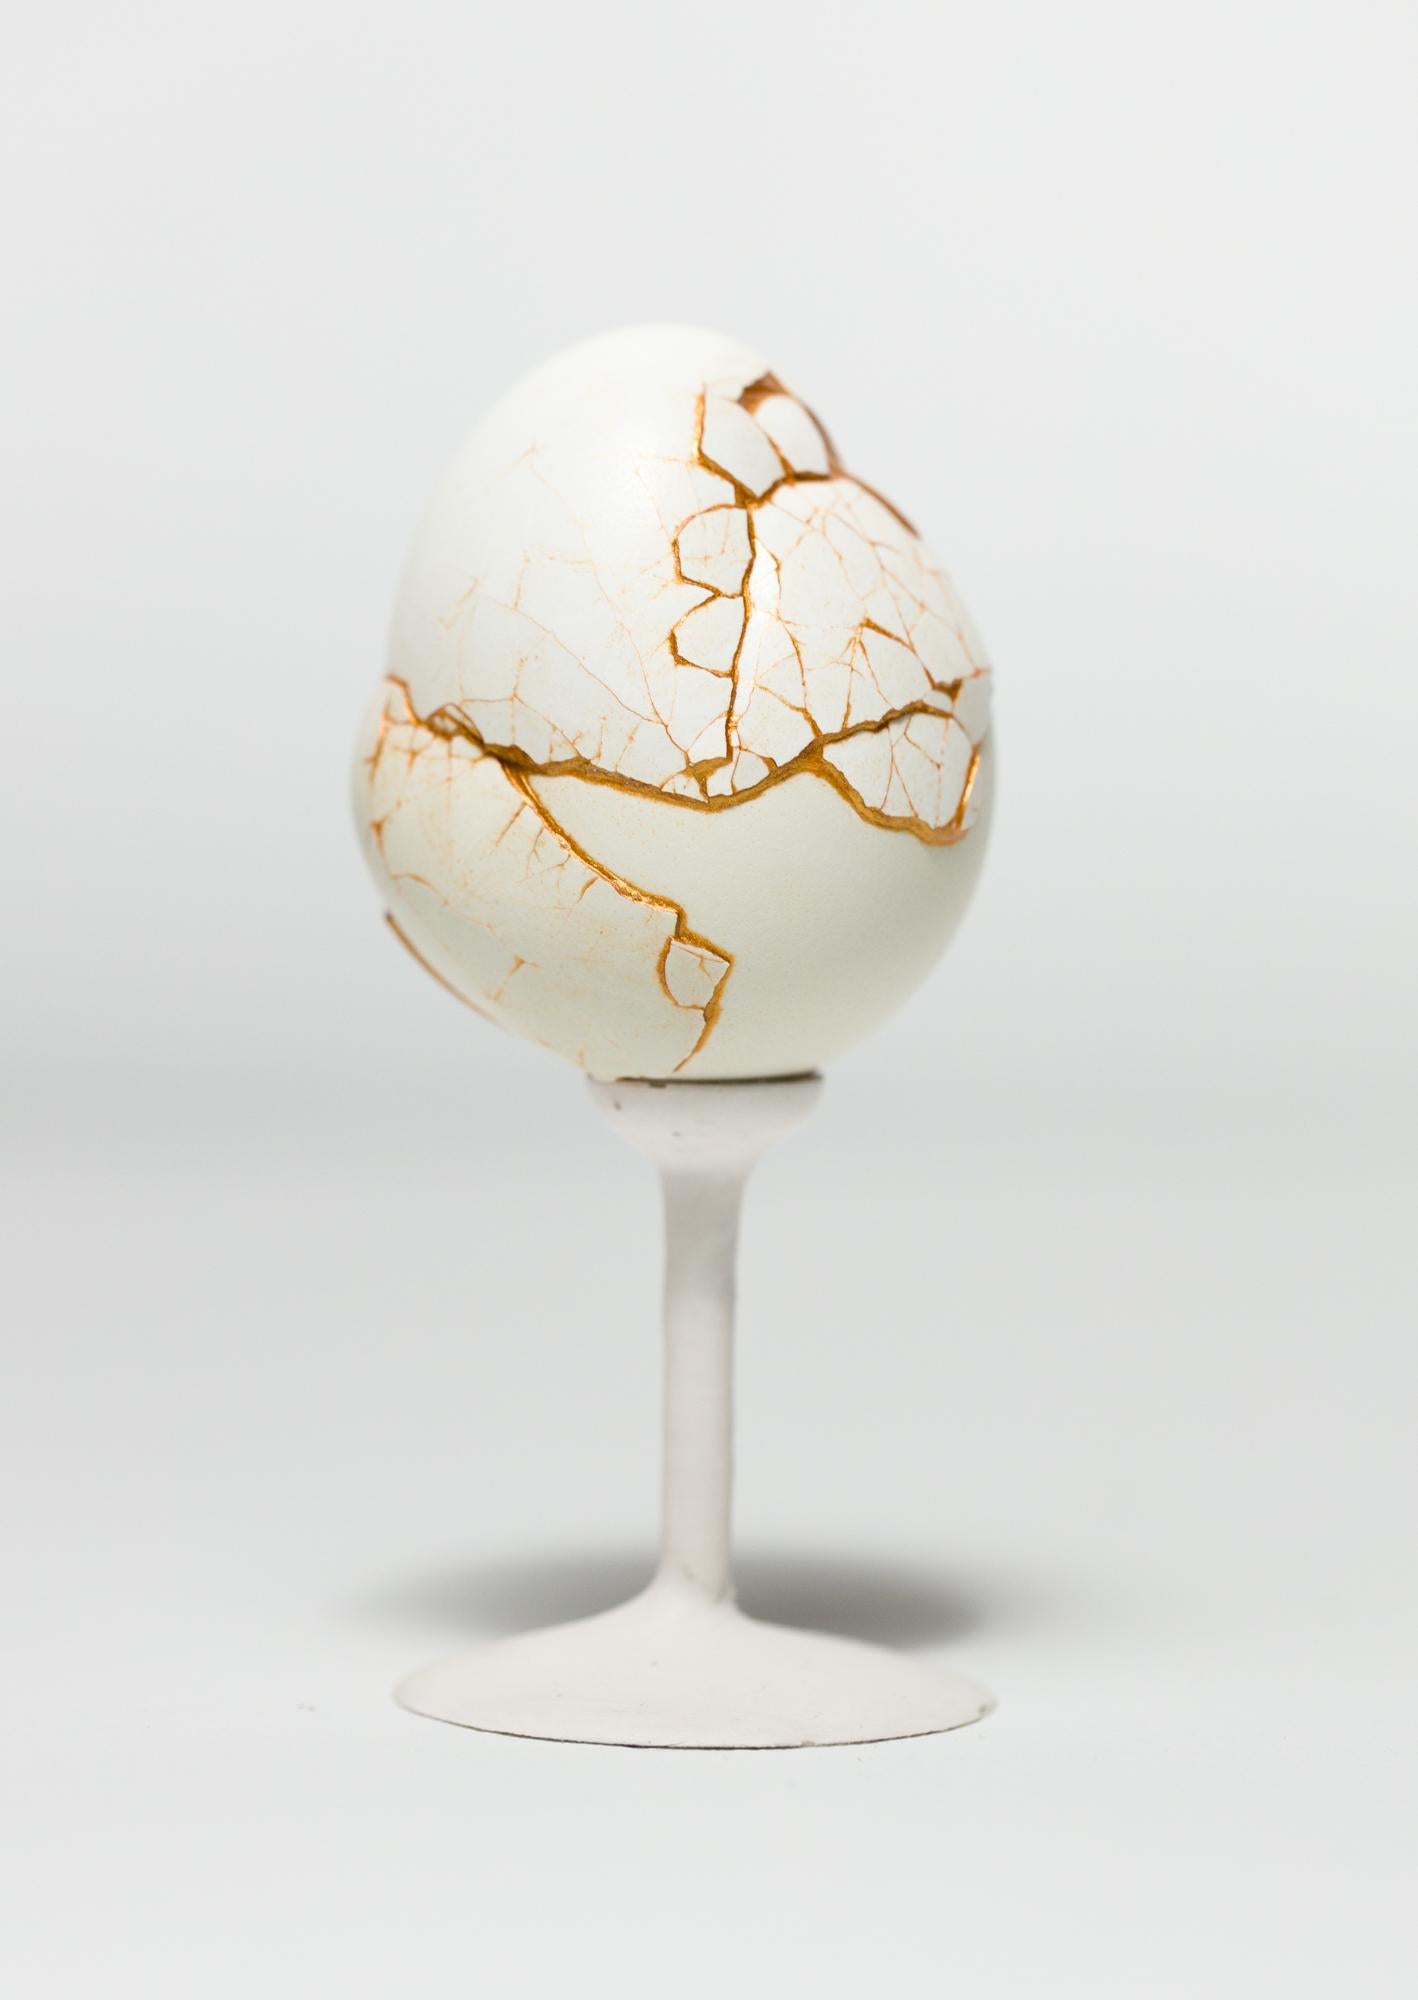 Katie VanVliet Still-Life Sculpture - "Chimaera: Green #14", Reconstructed egg sculpture